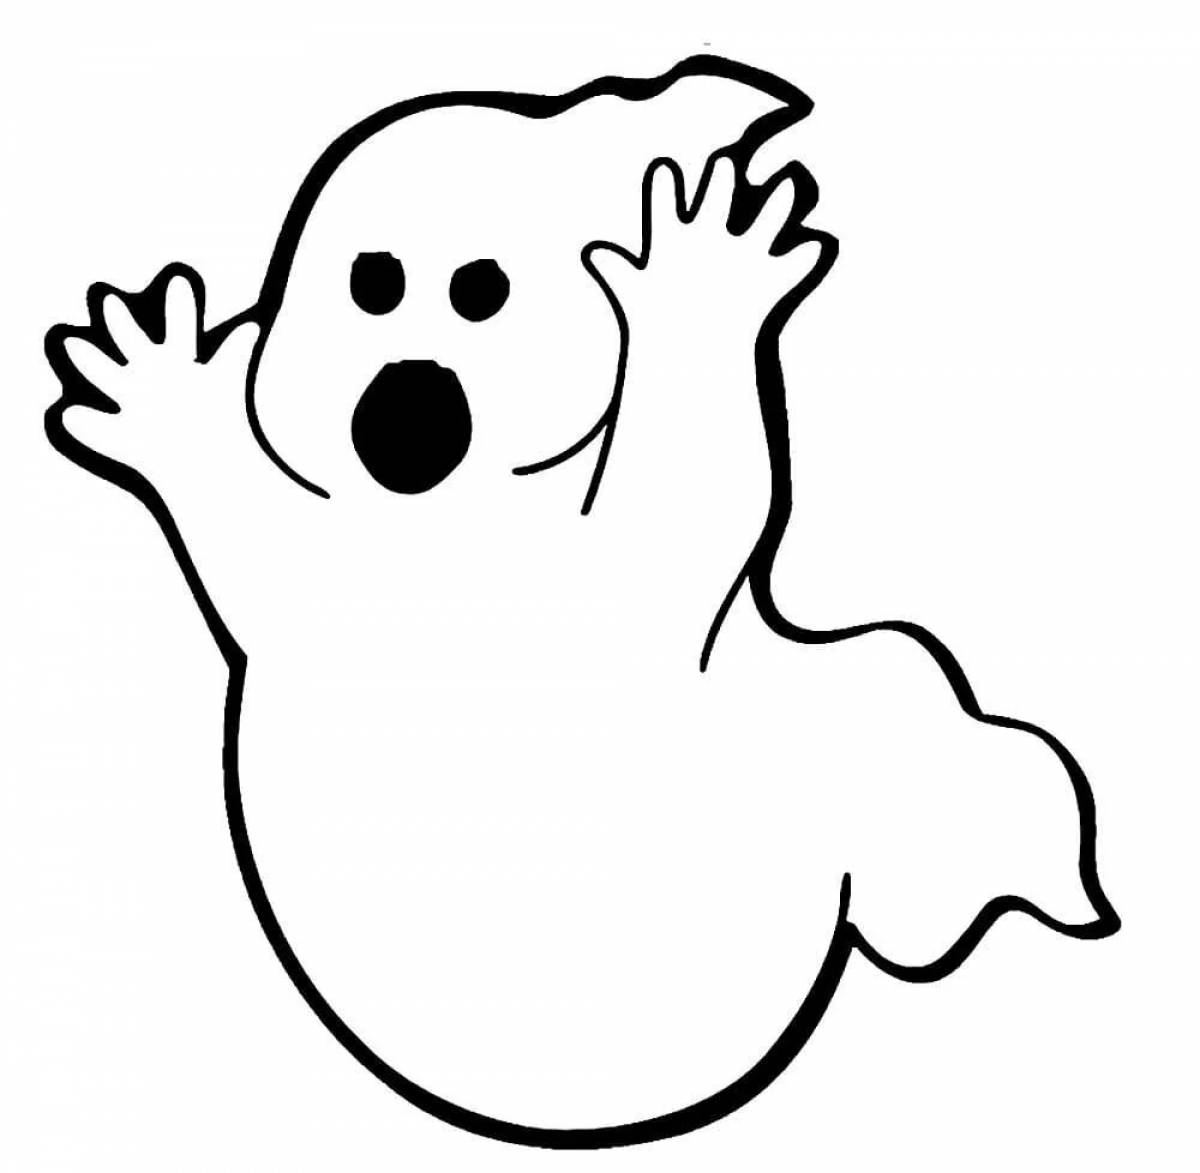 Ghost for children #2